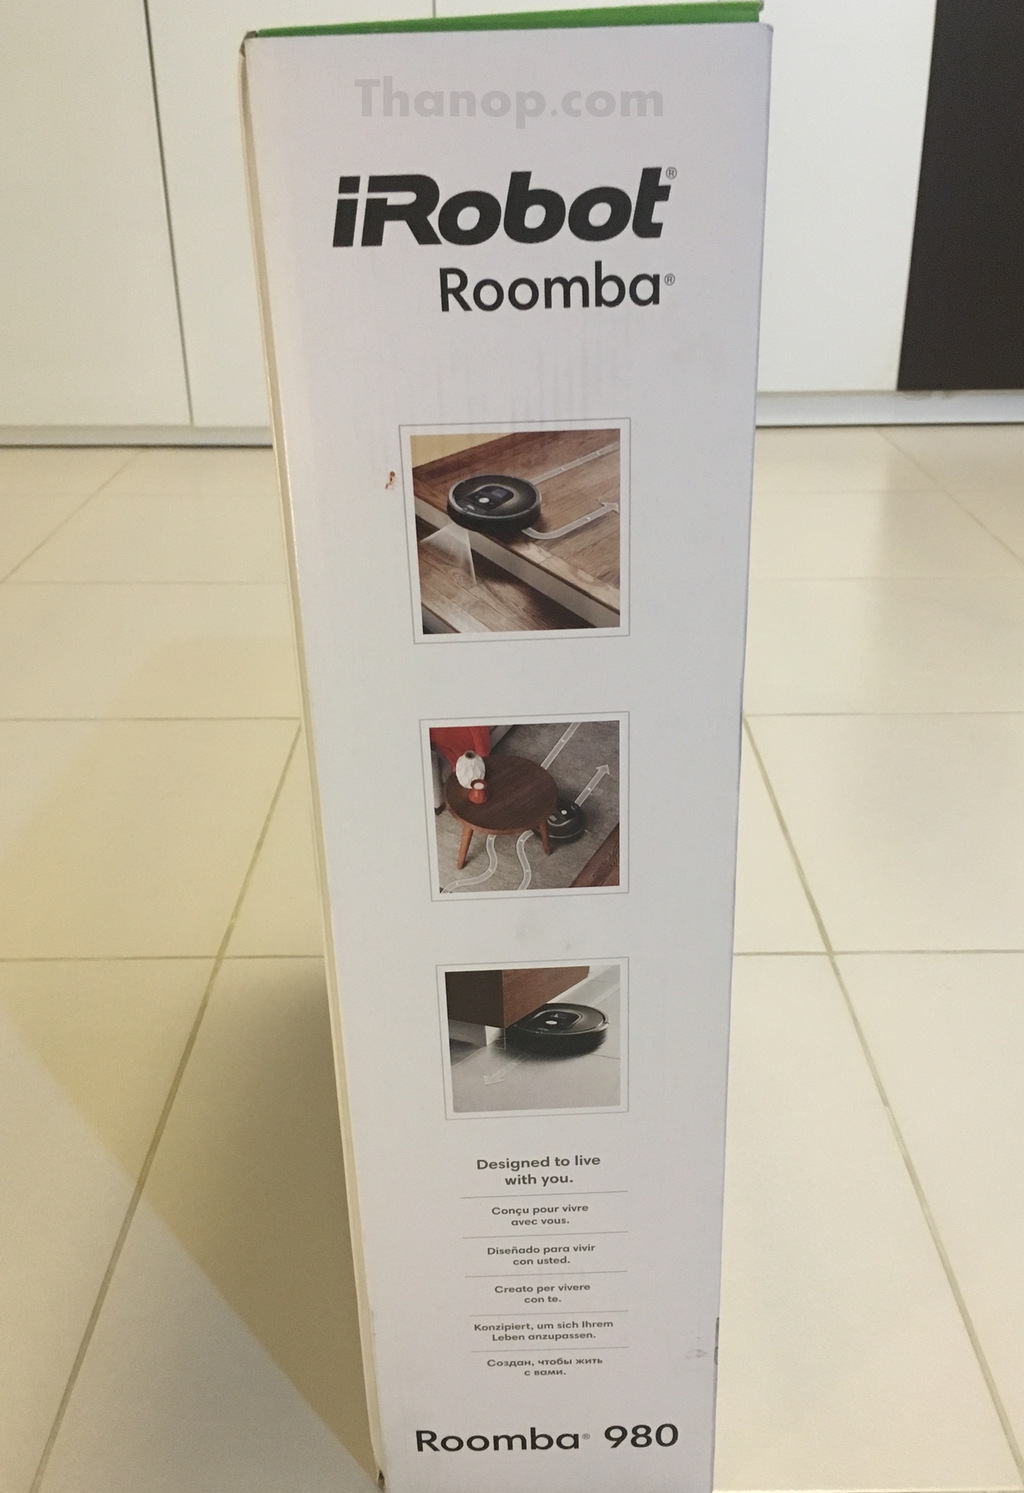 irobot-roomba-980-box-right